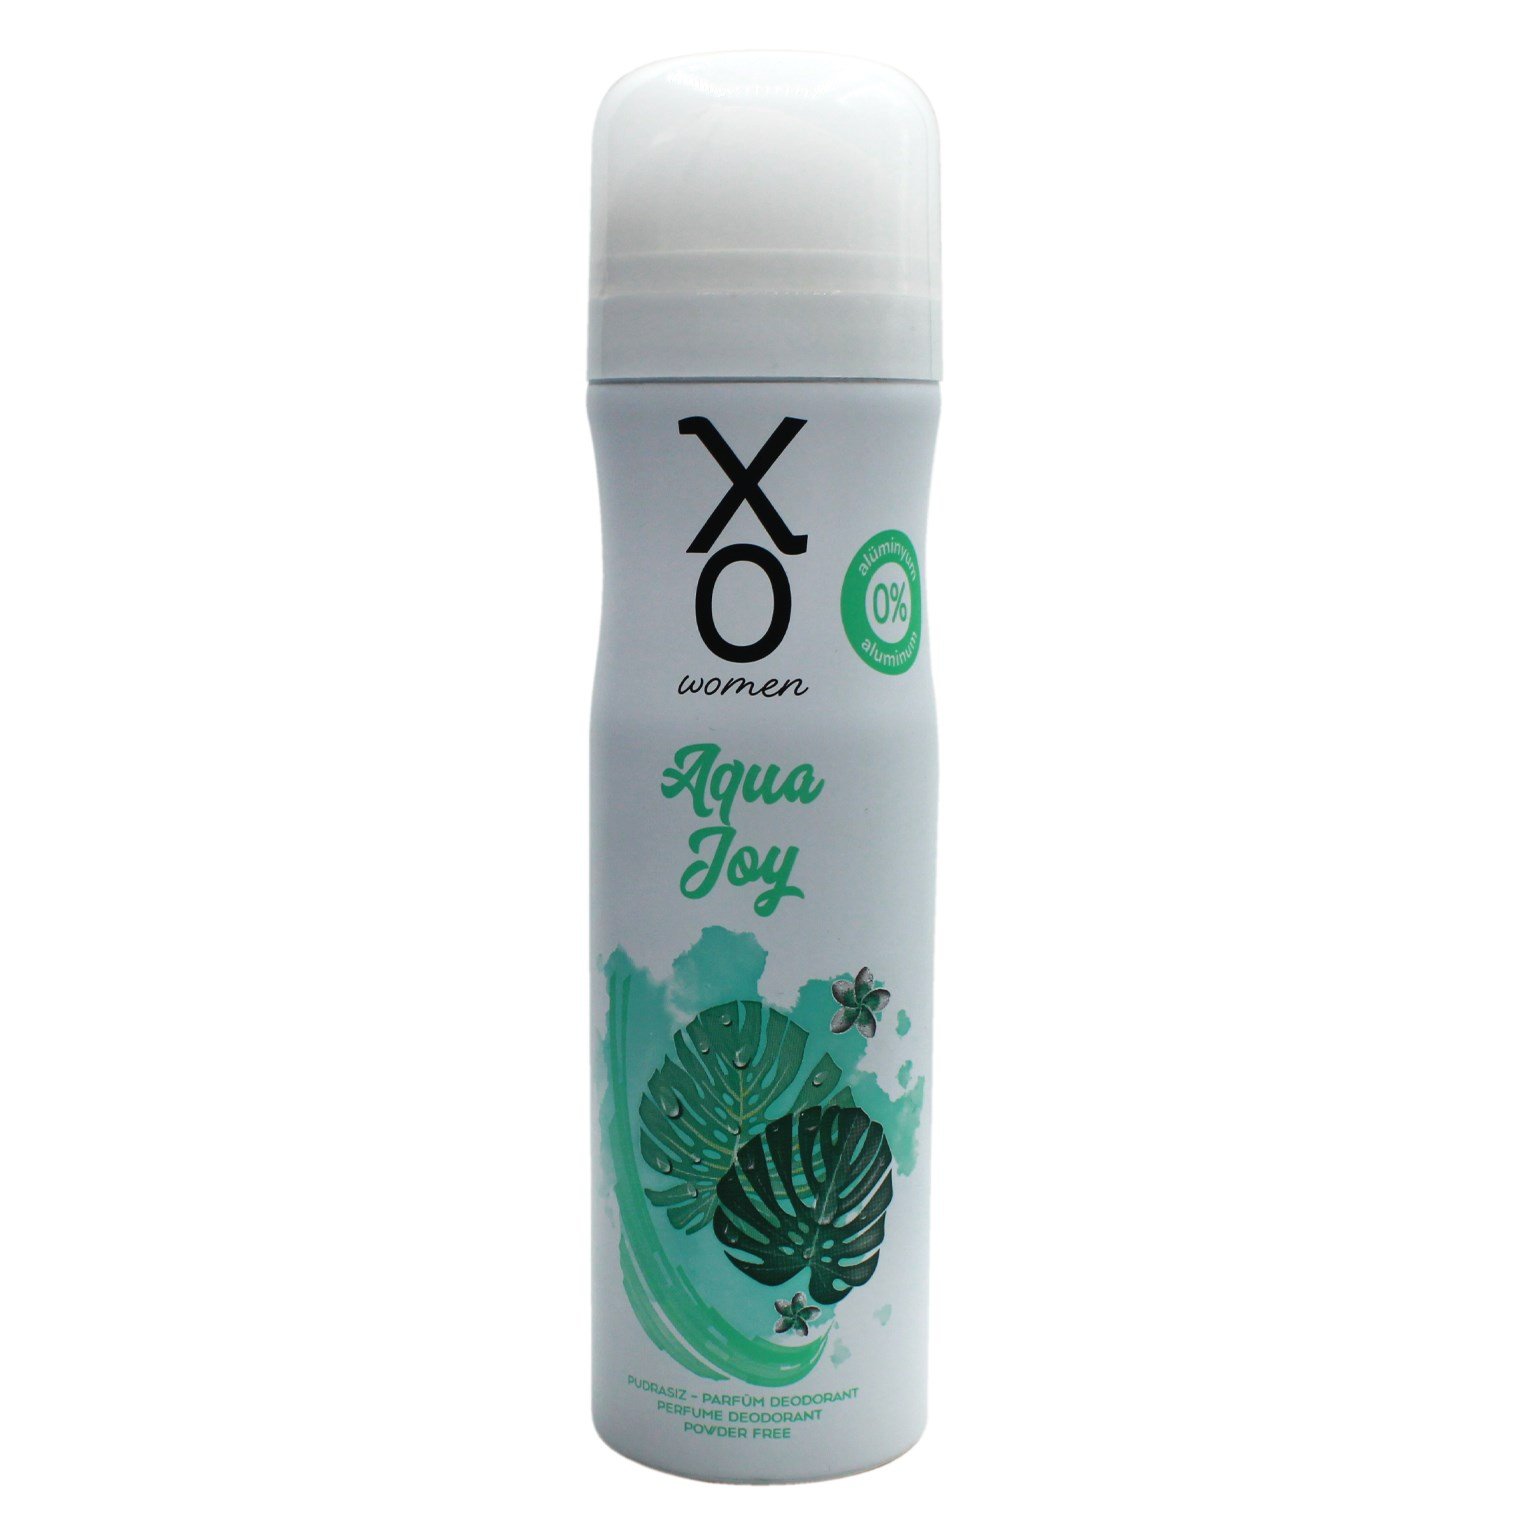 Xo Deodorant Bayan Aqua Joy 150ml